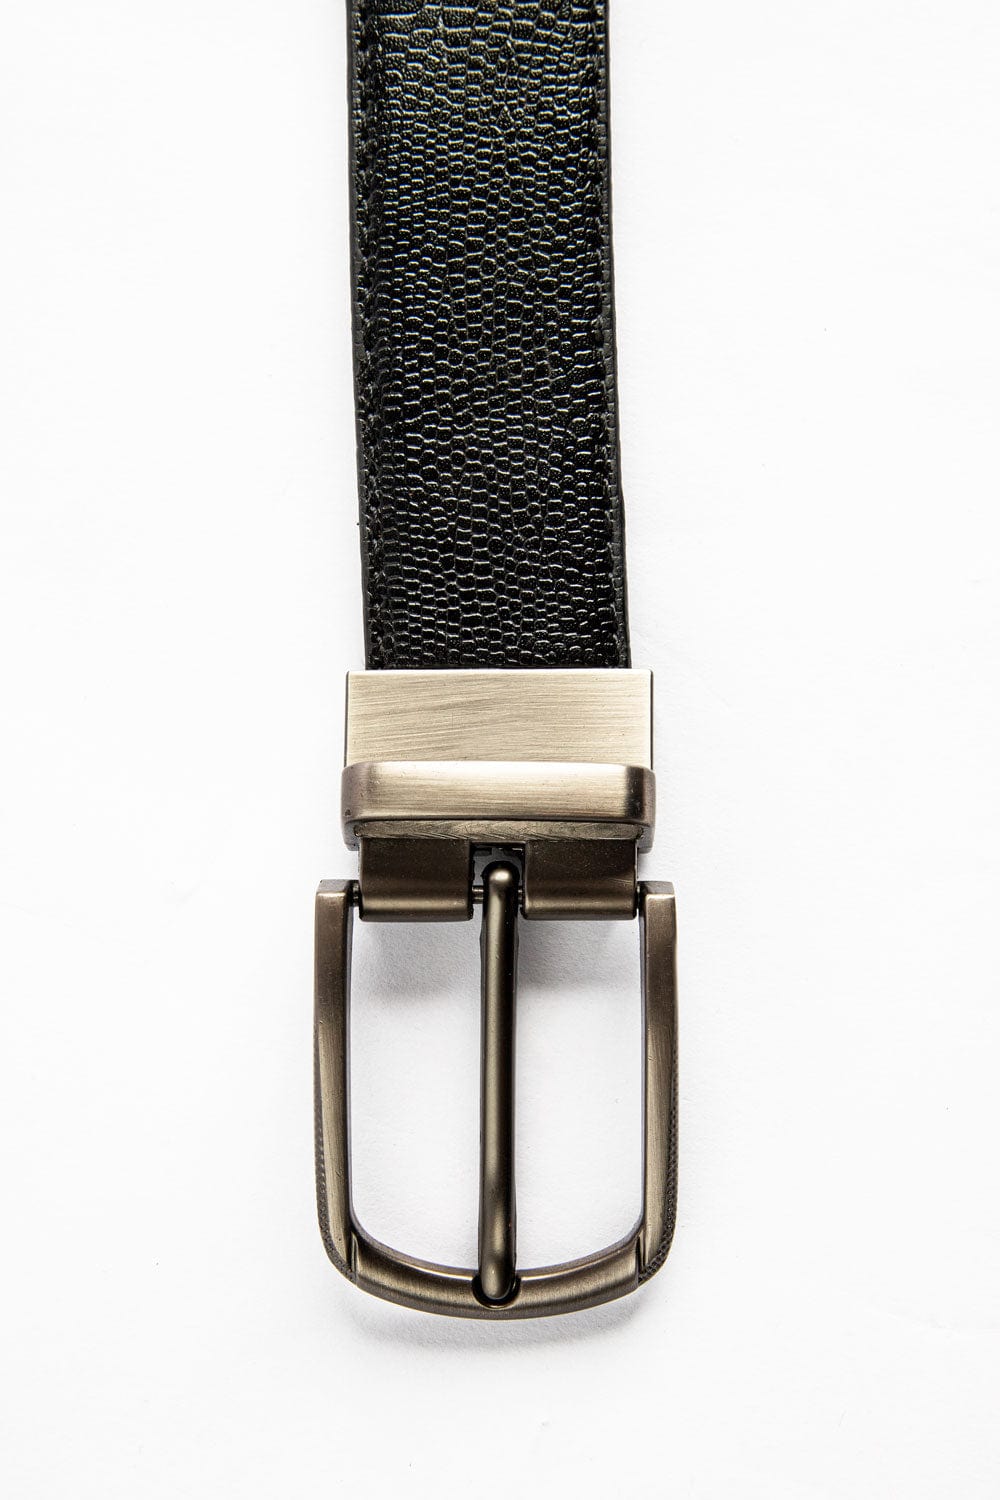 Hope Not Out by Shahid Afridi Men Belts Reversable Corocodile Style Fashion Belt HMBLT210008